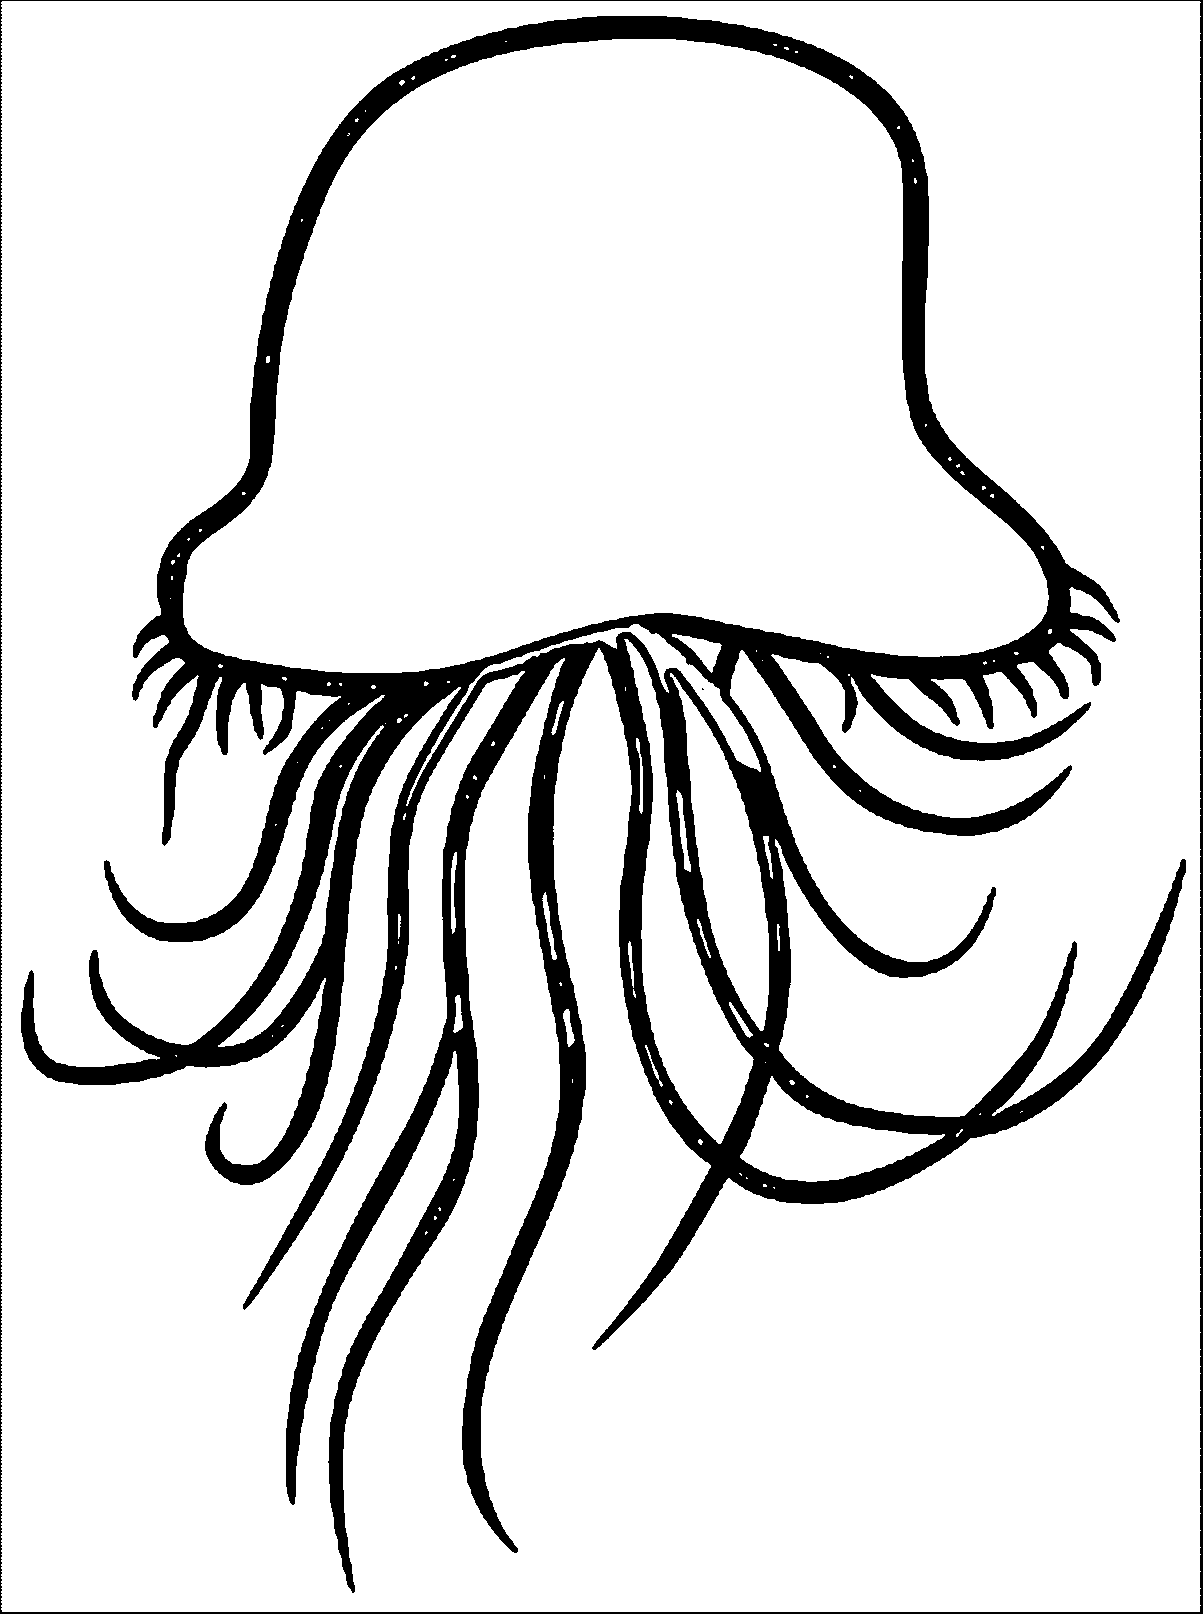 Jellyfish clipart atebr6r8c wecoloringpage